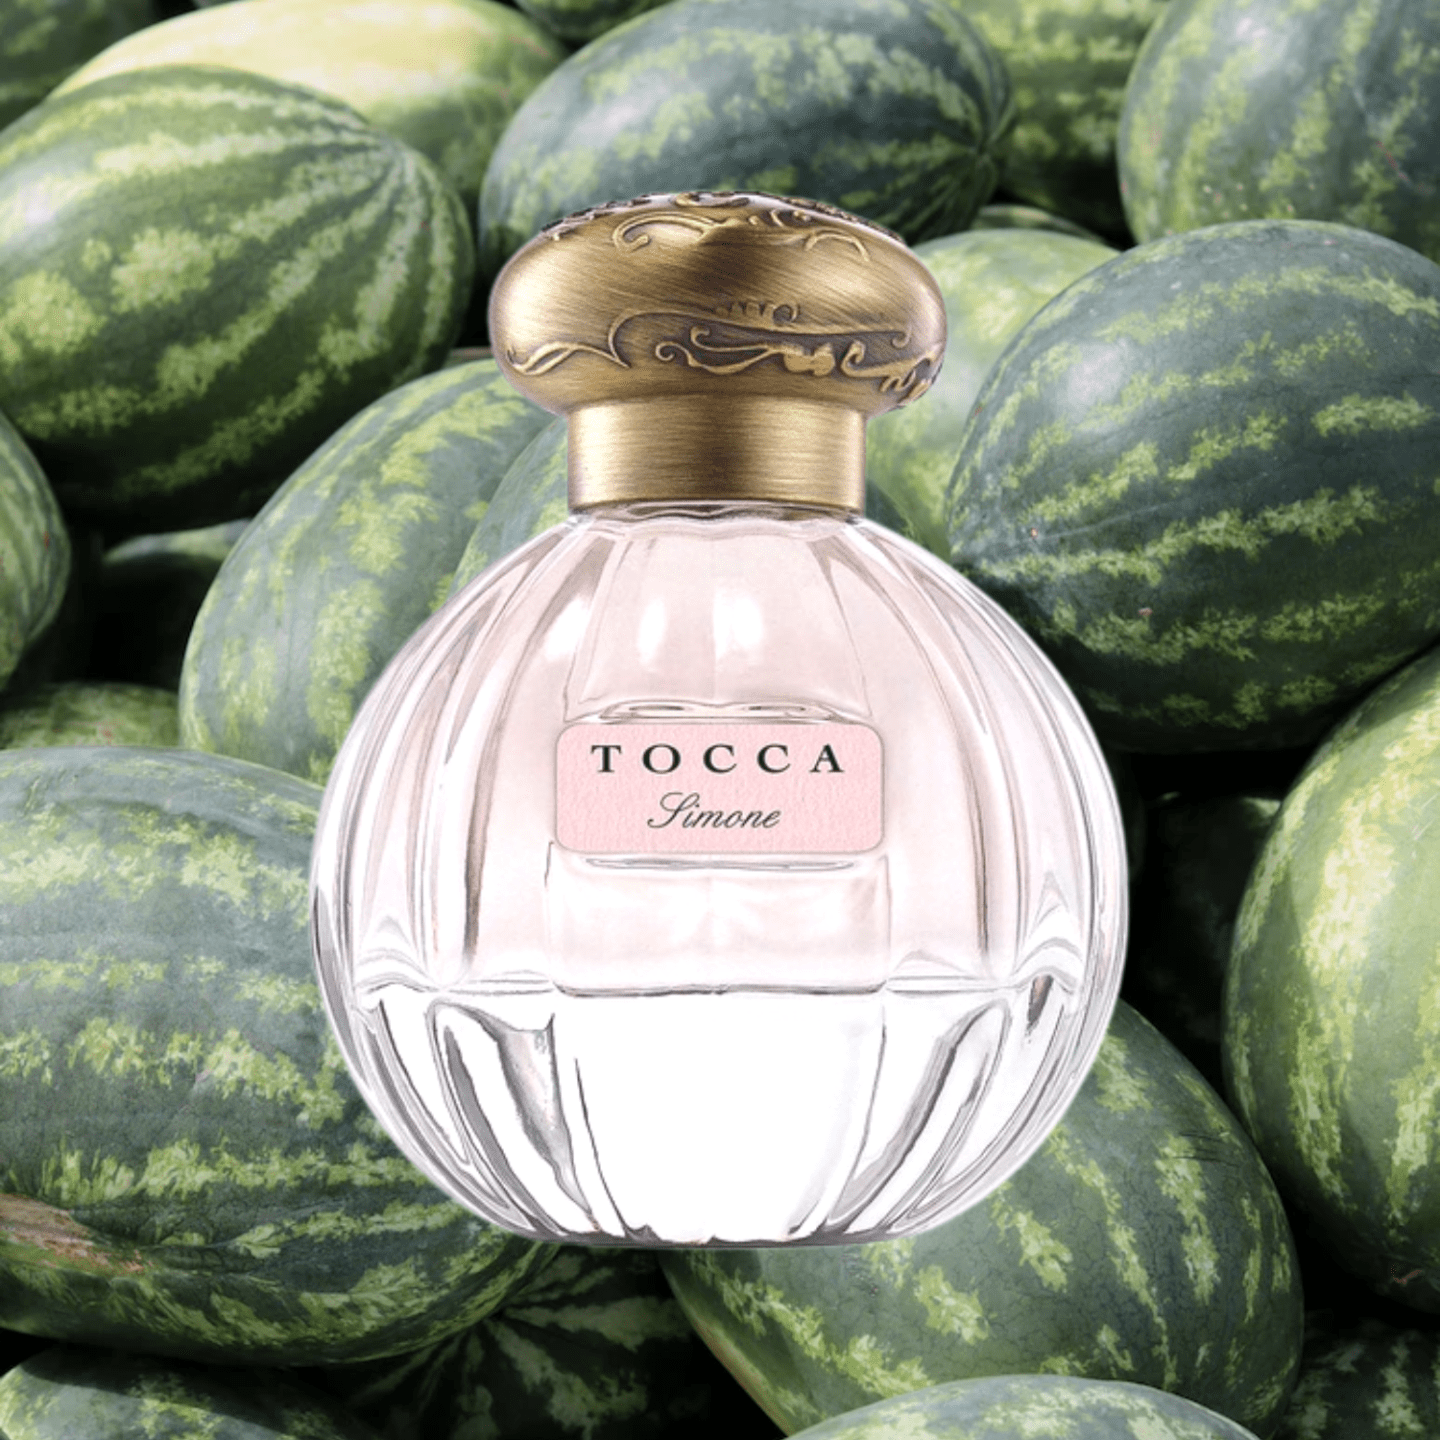 Best Watermelon Perfumes
Tocca Simone